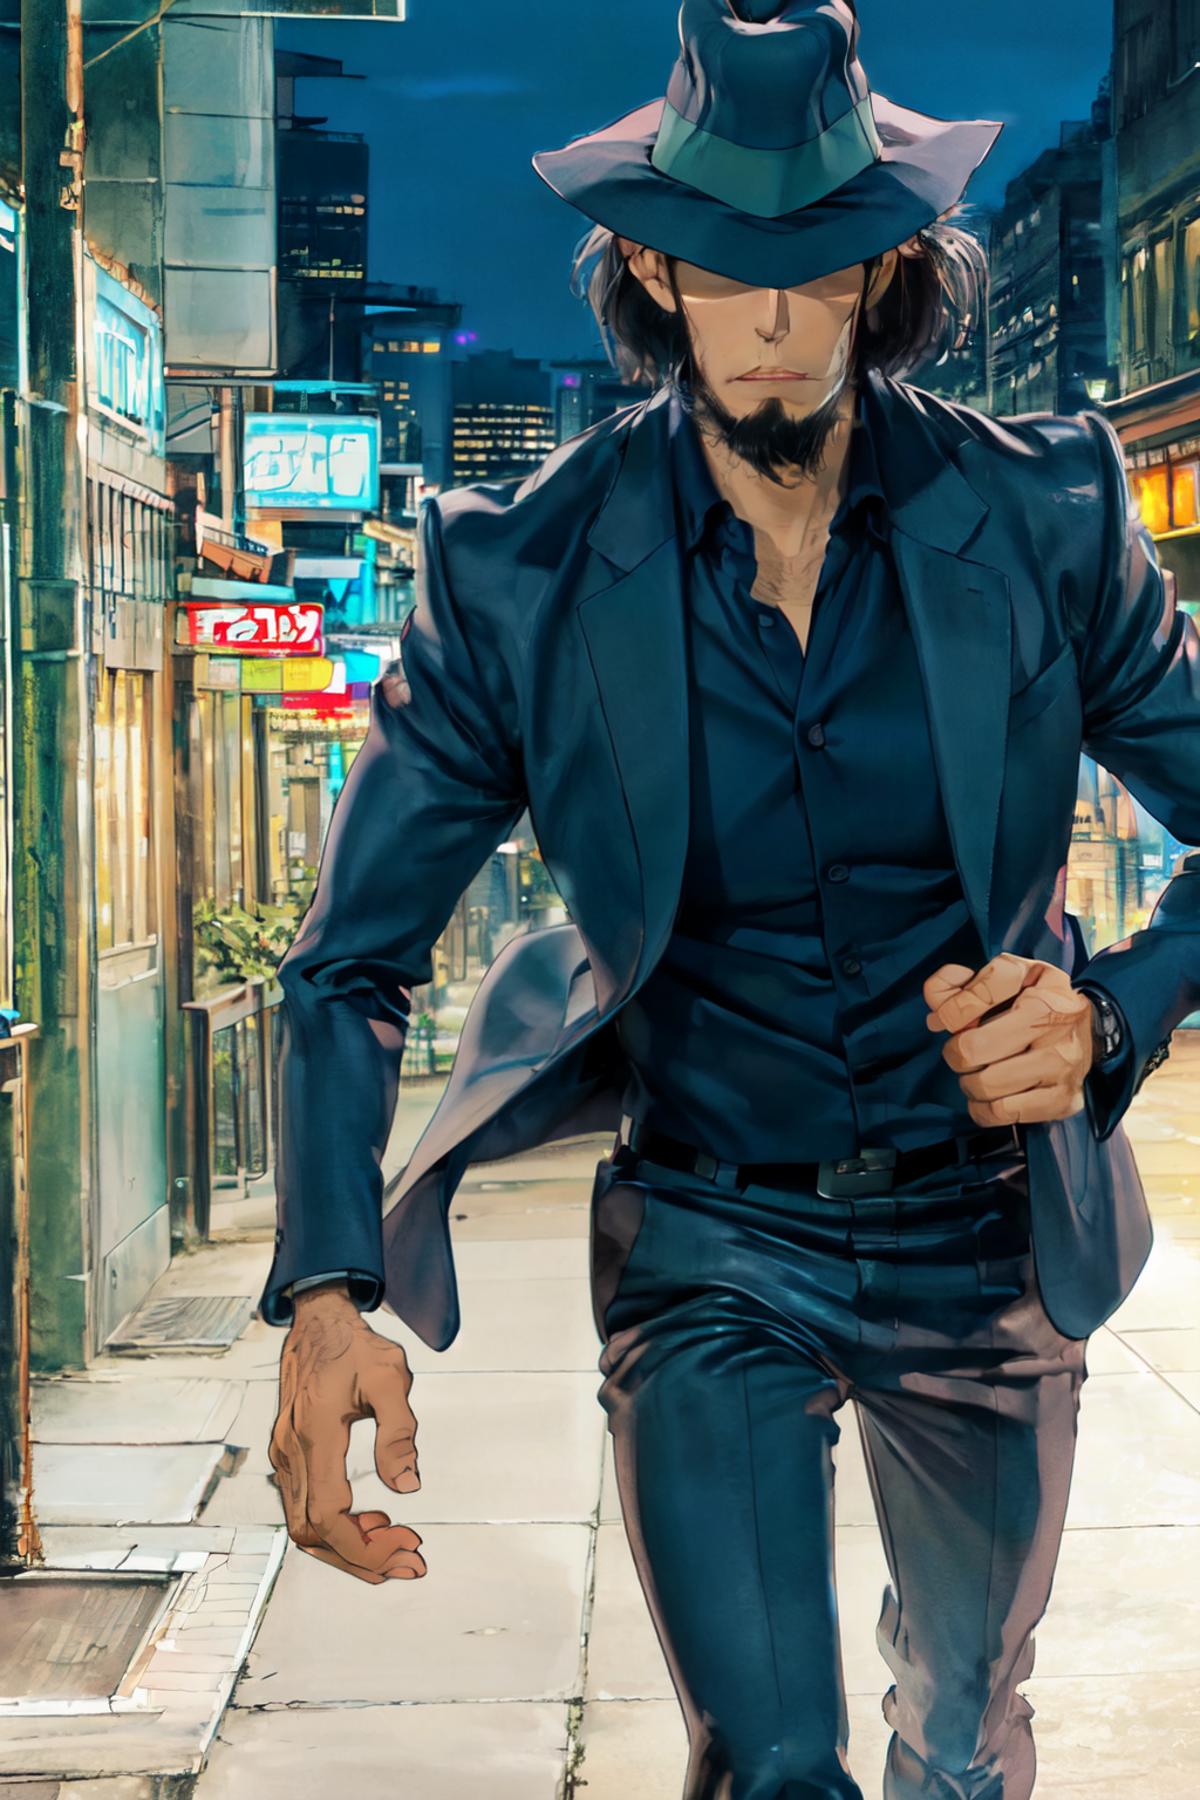 Daisuke Jigen - Lupin III image by kokurine